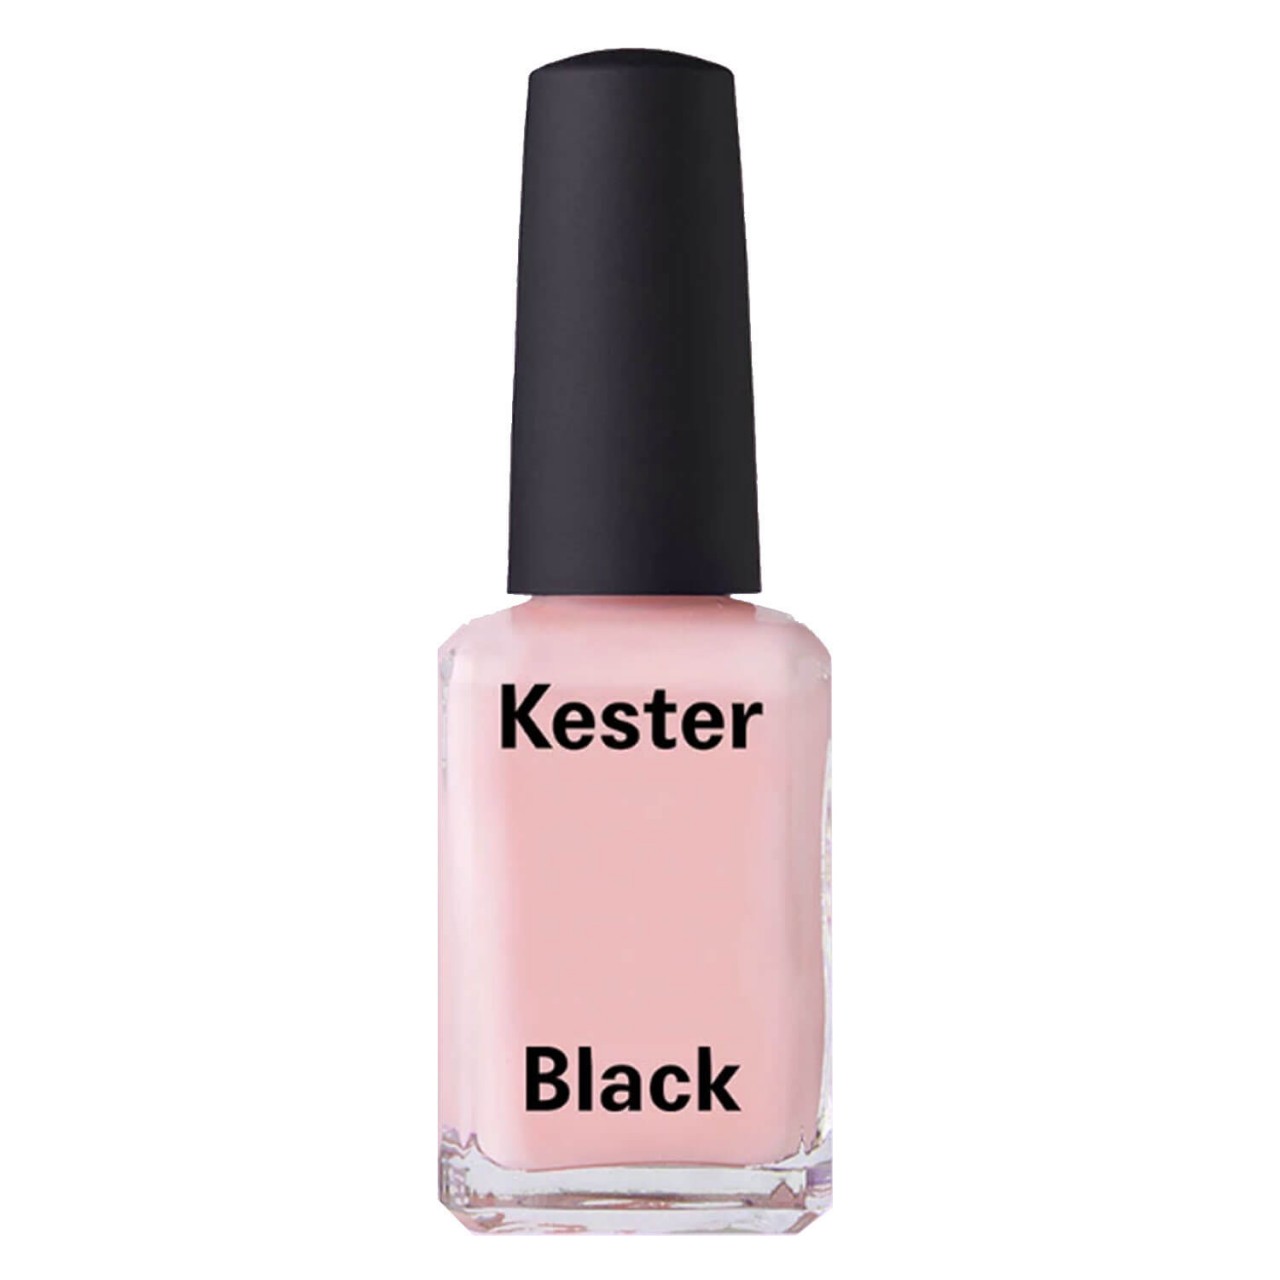 KB Colours - Coral Blush von Kester Black